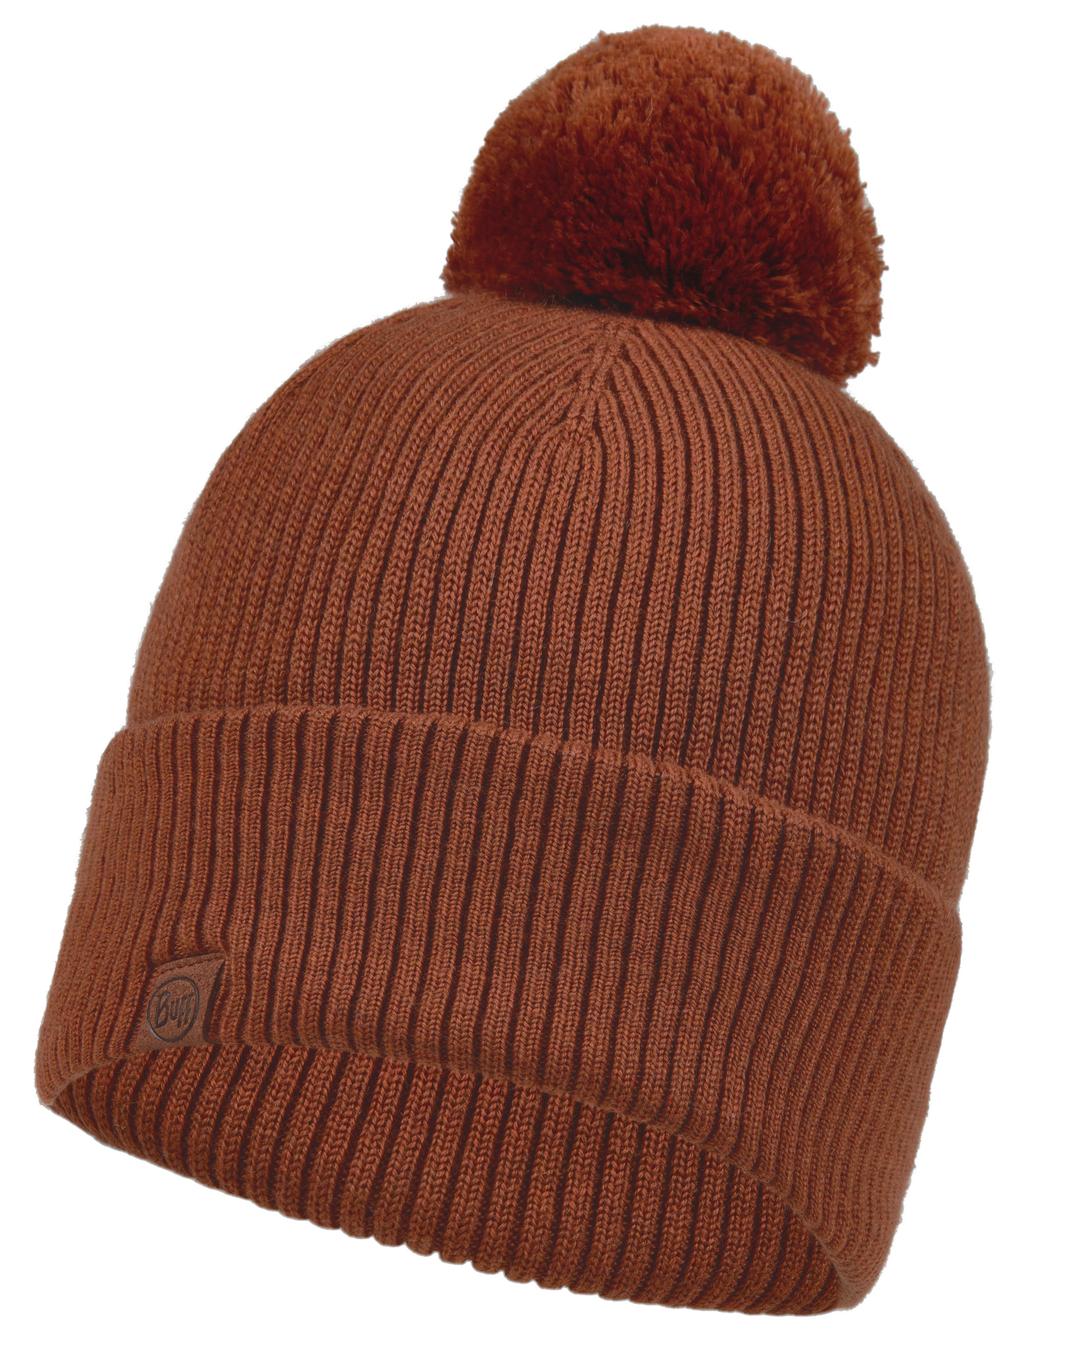 Шапка мужская Buff Knitted Hat Tim коричневая, one size